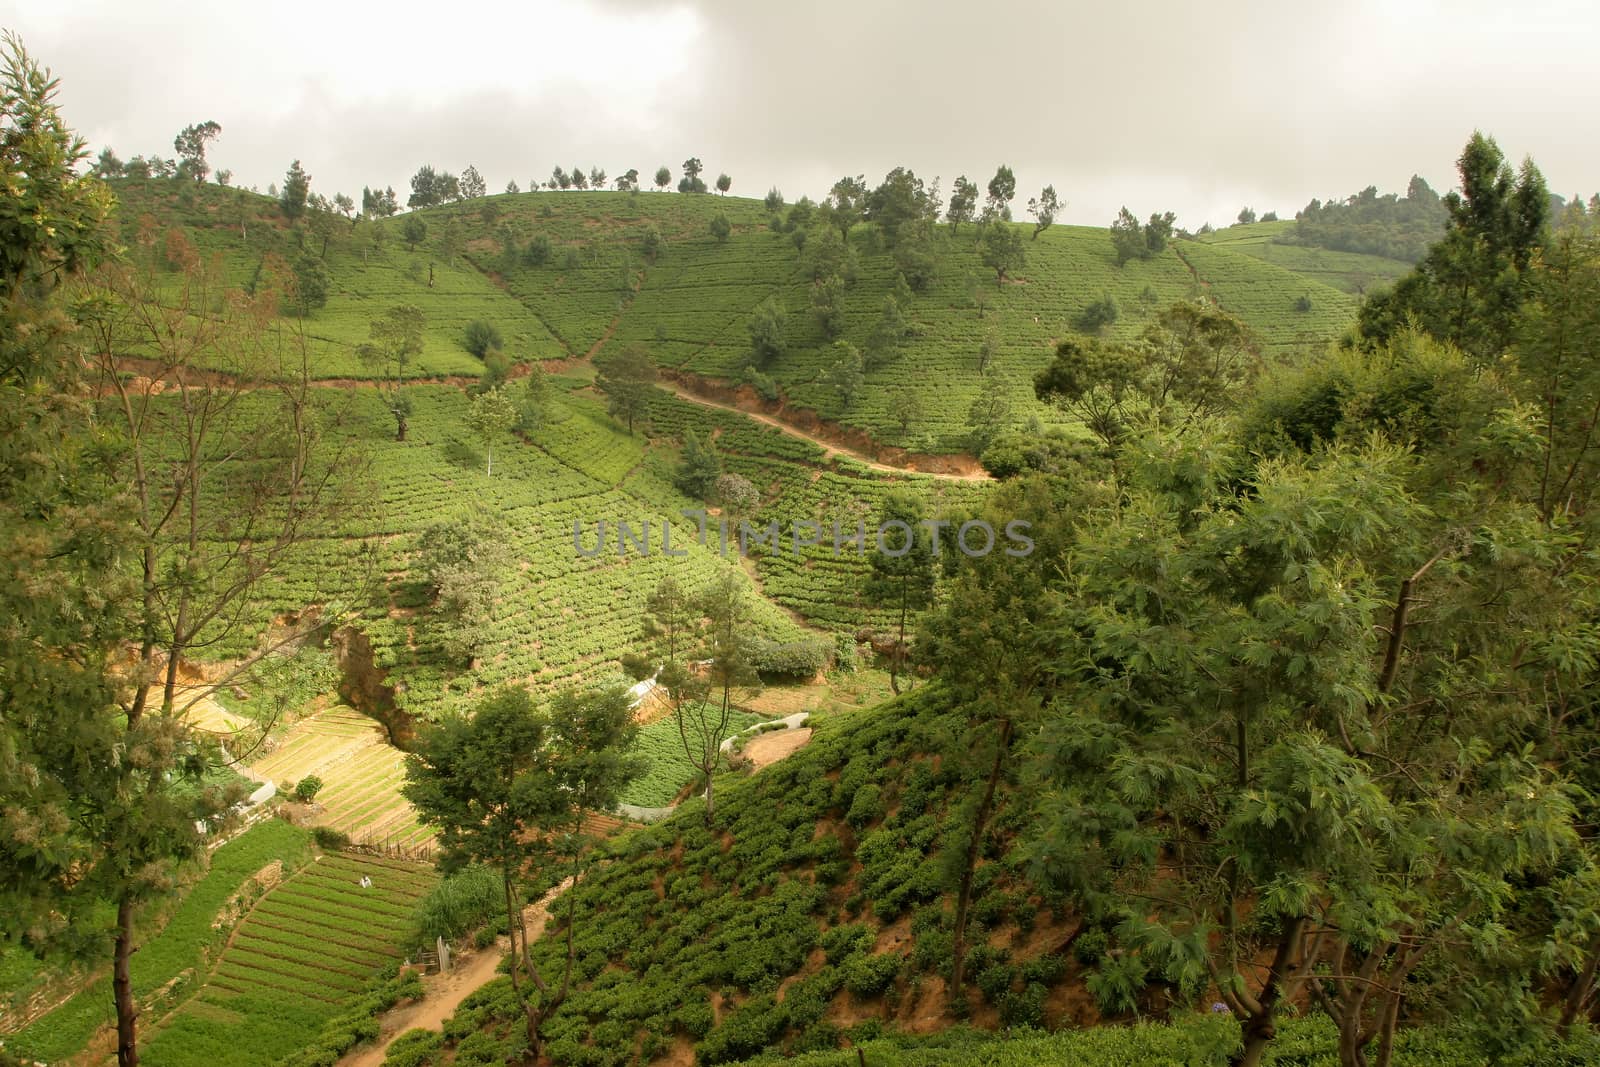 Nuwara Eliya Sri Lanka tea plantation with terraced hills of tea bushes by kgboxford